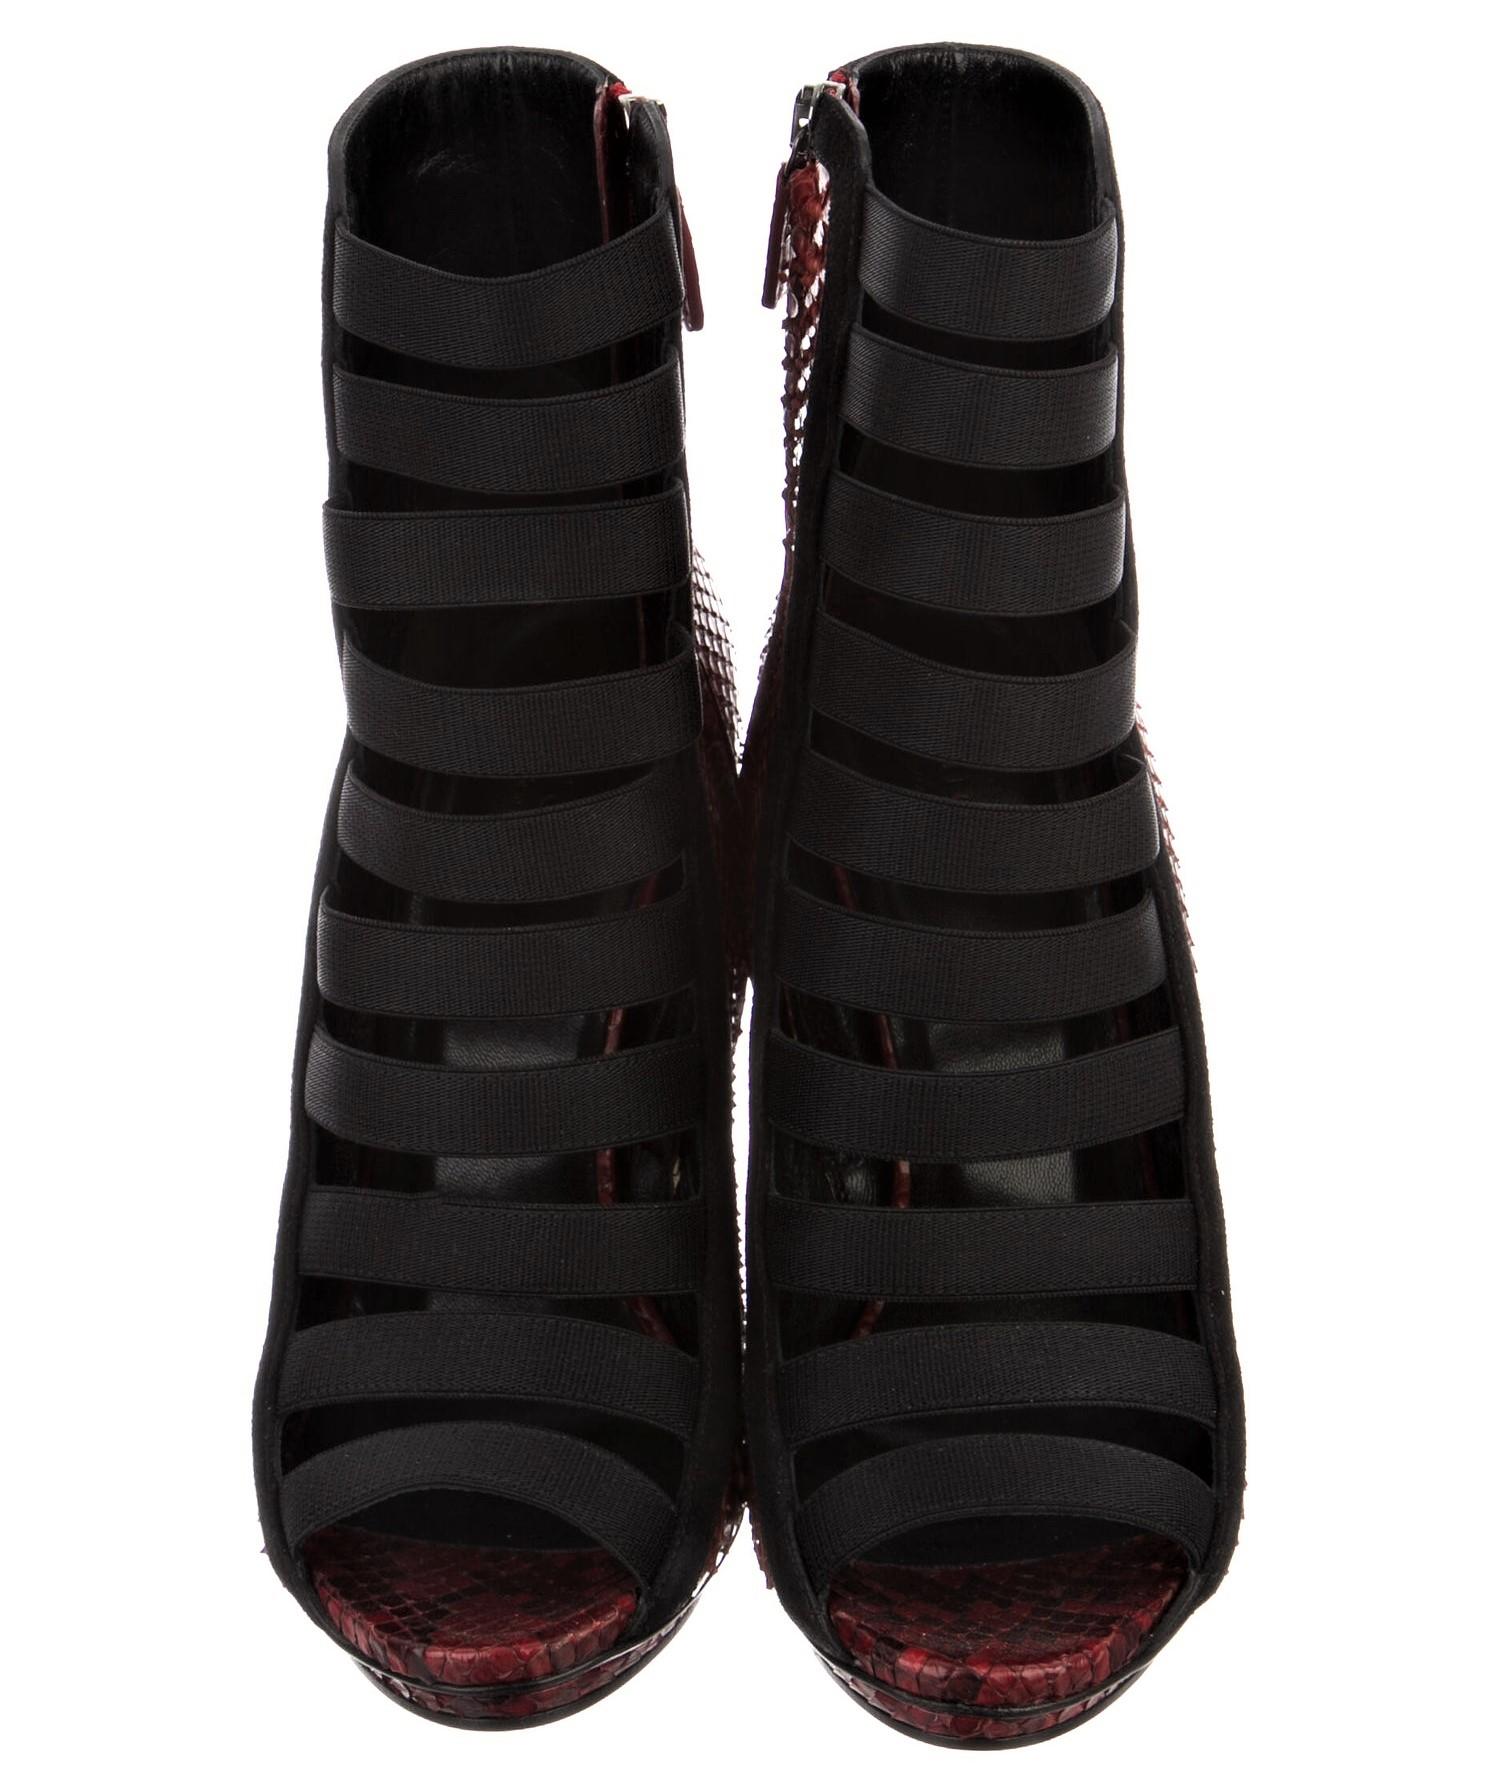 New Gucci Python Snakeskin S/S 2014 Runway Nicki Minaj Heels Booties Boots Sz 38 9